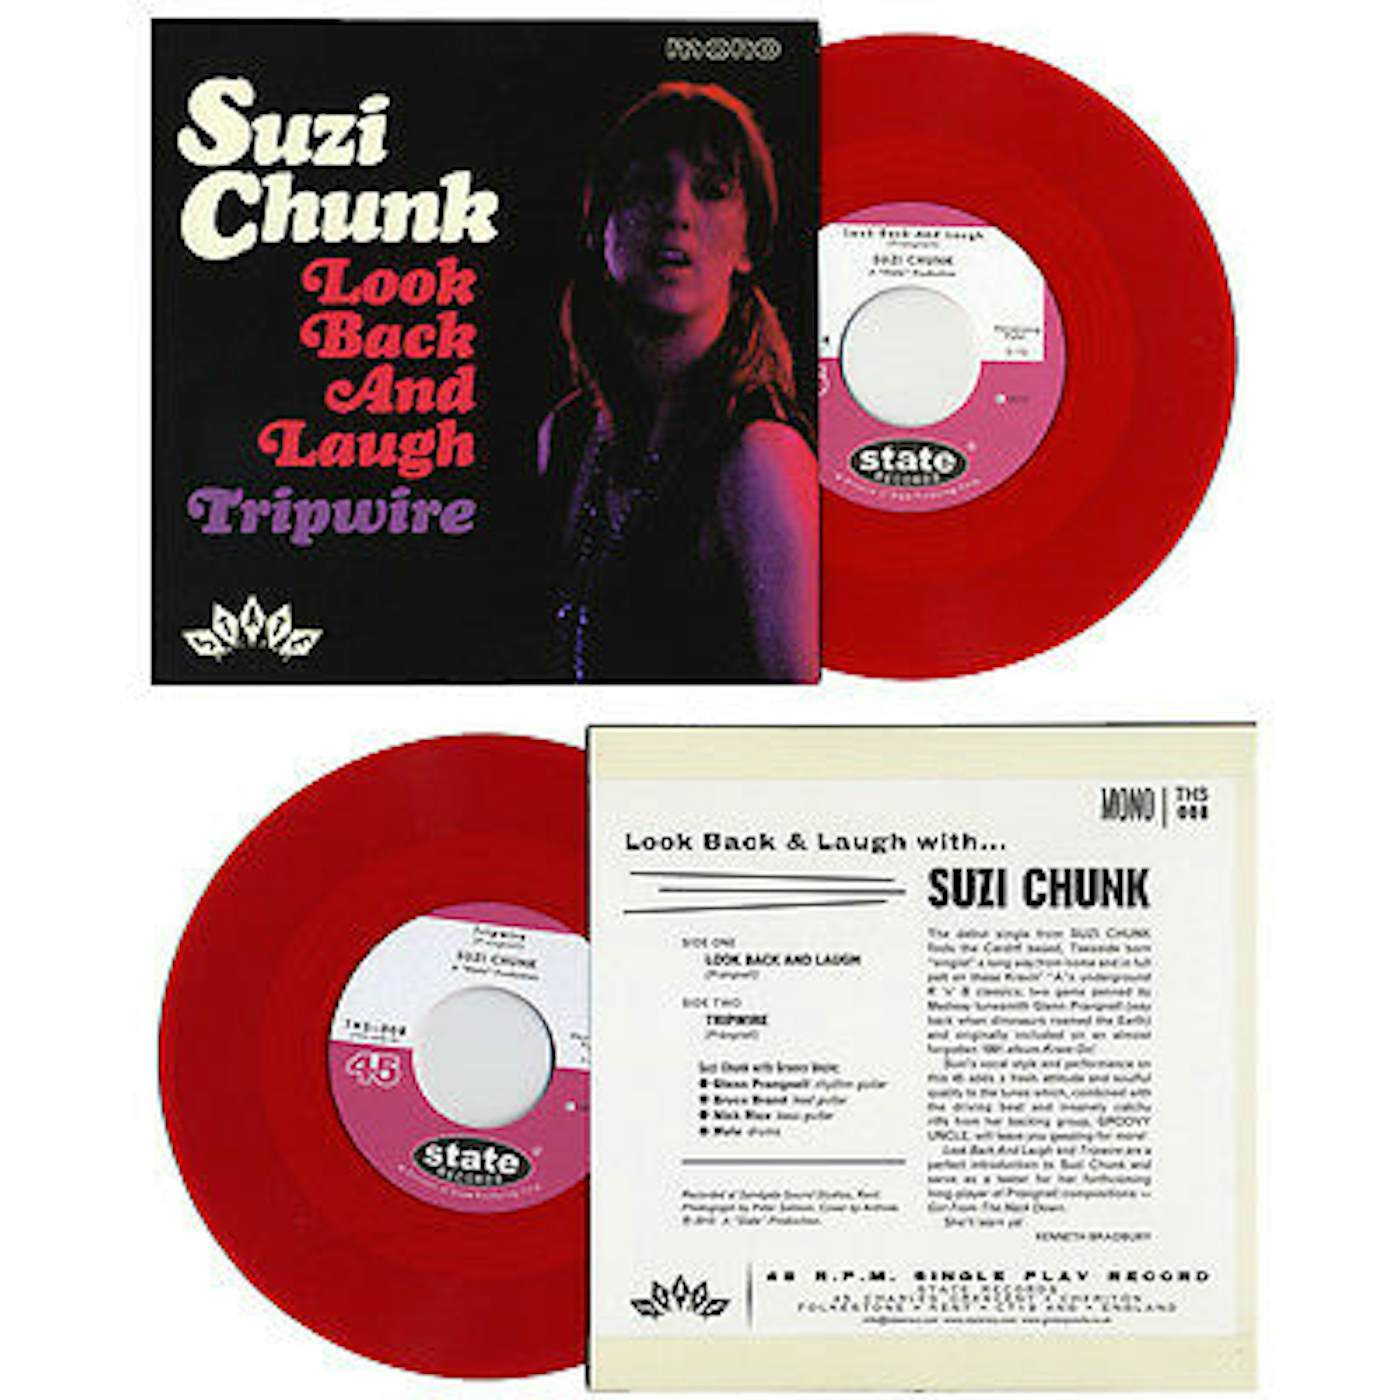 Suzy Chunk LOOK BACK & LAUGH Vinyl Record